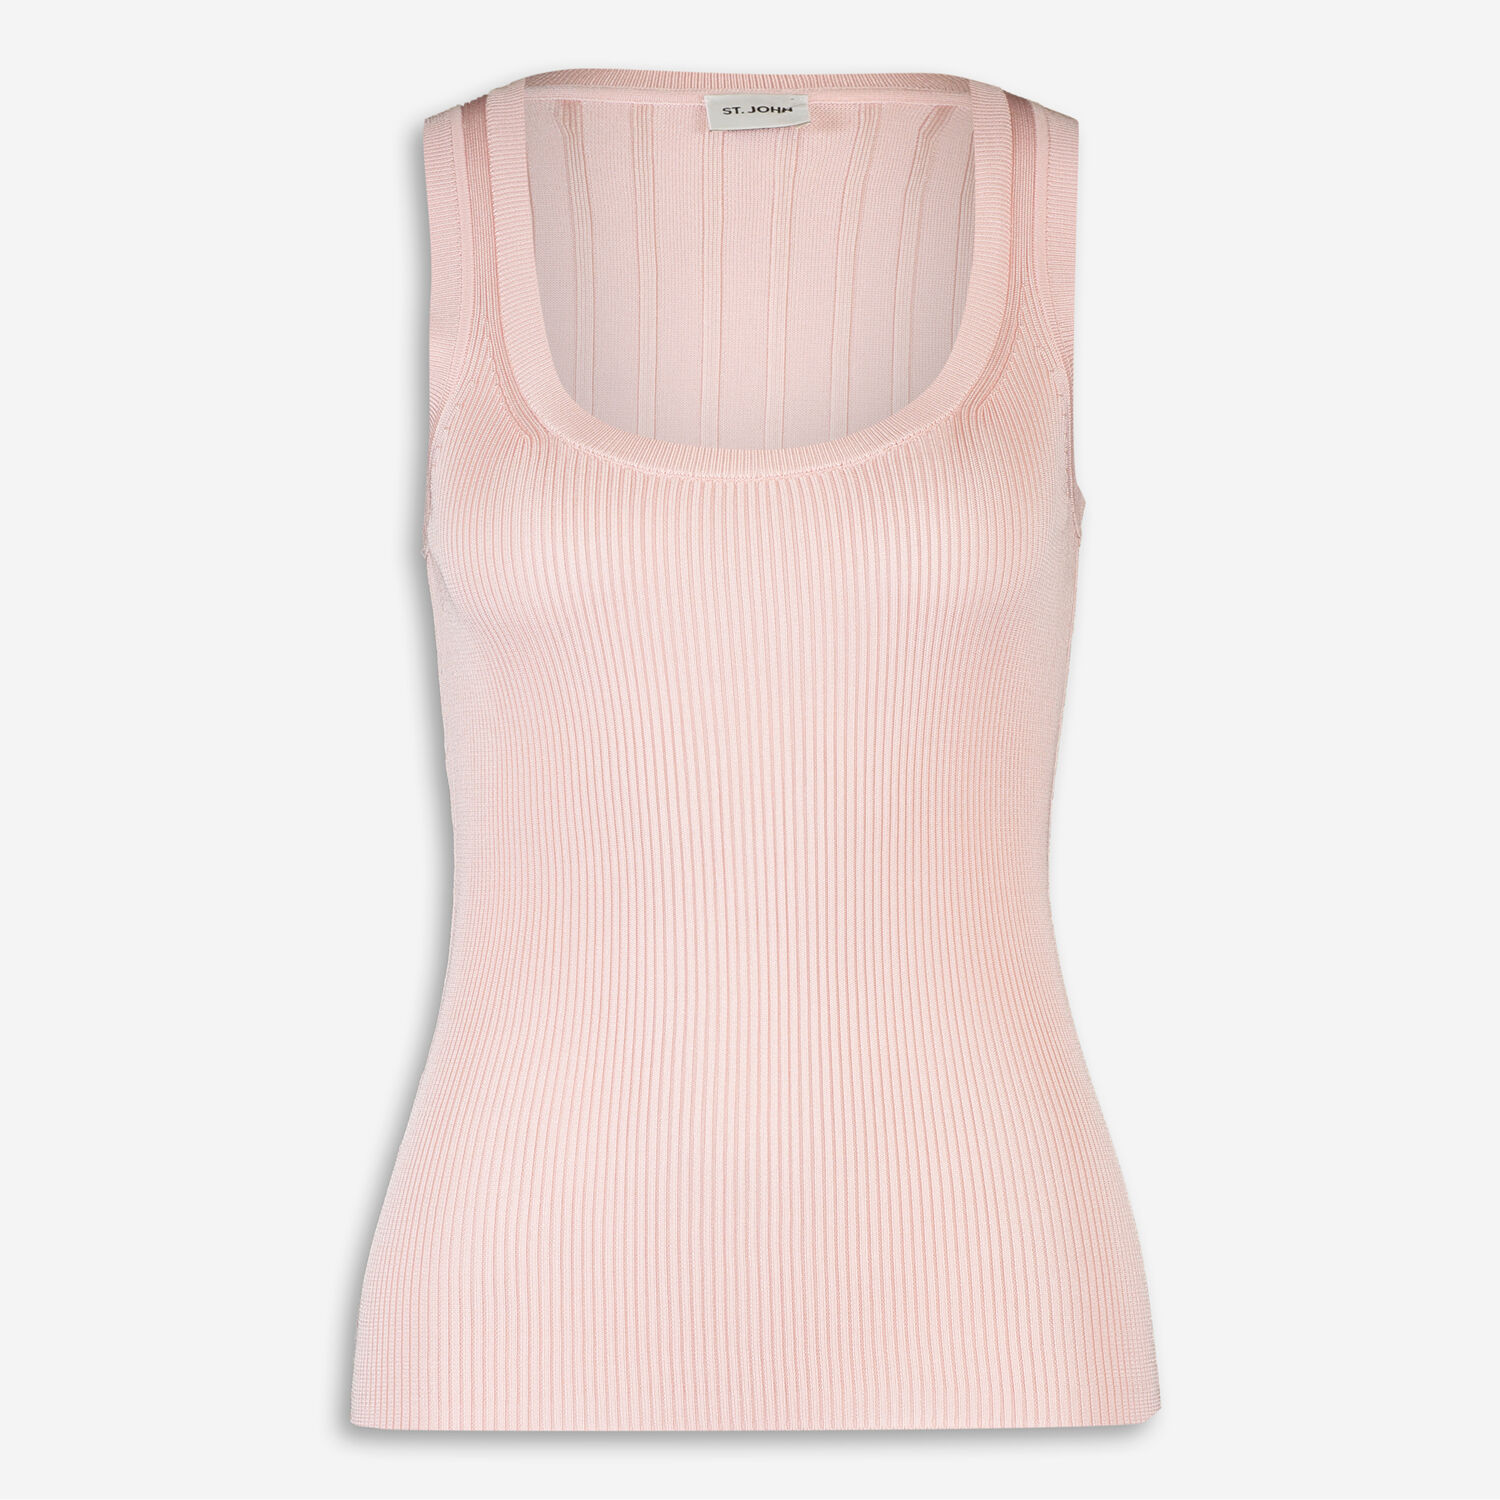 Bnwt CCDK TK Maxx designer pink satin feel top size36 size 10 rrp £79